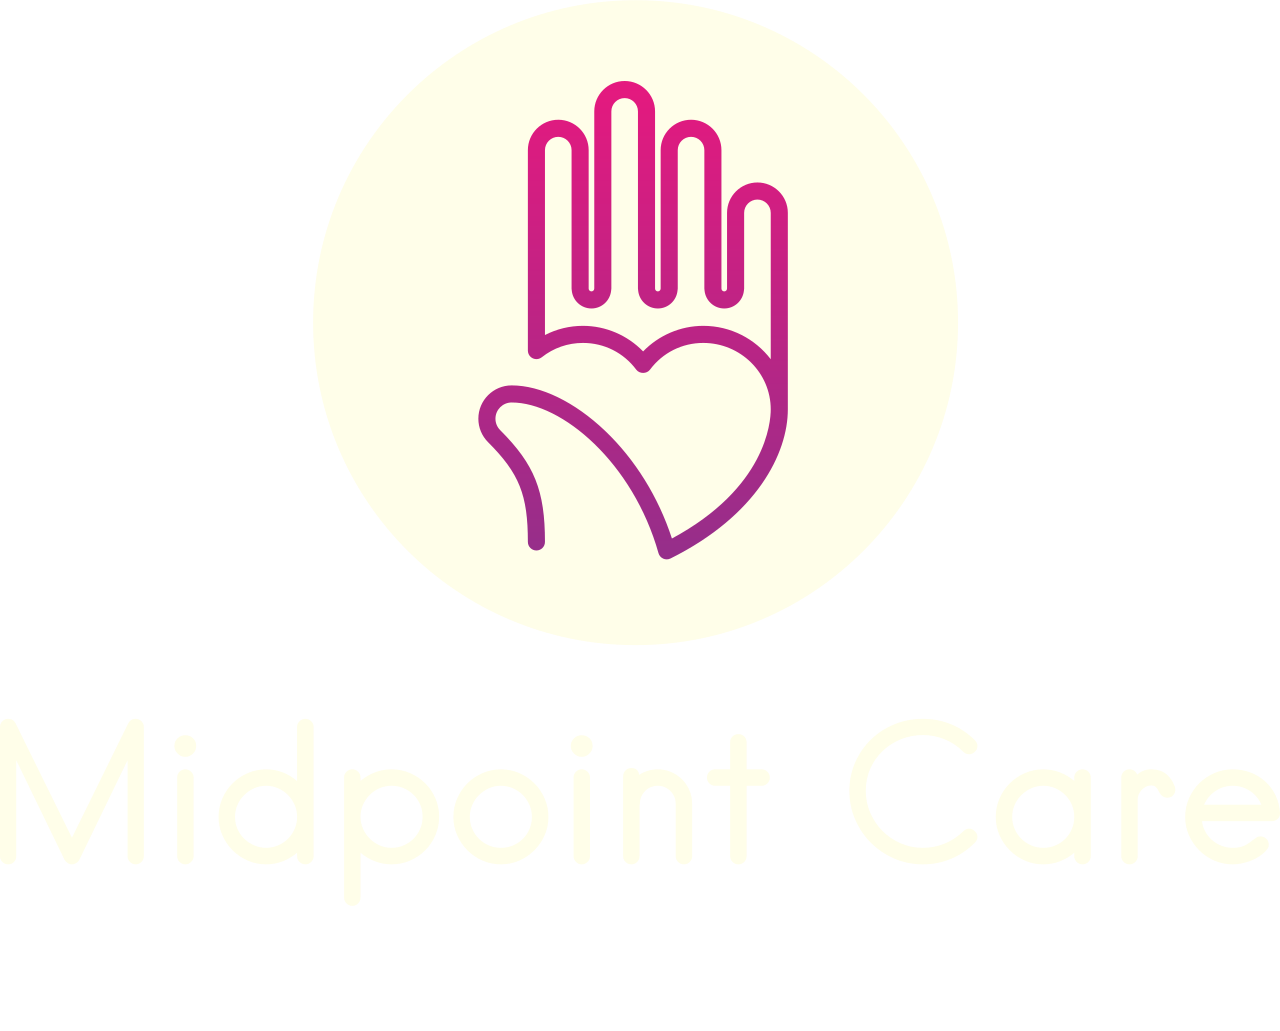 Midpoint Care LLC 's logo